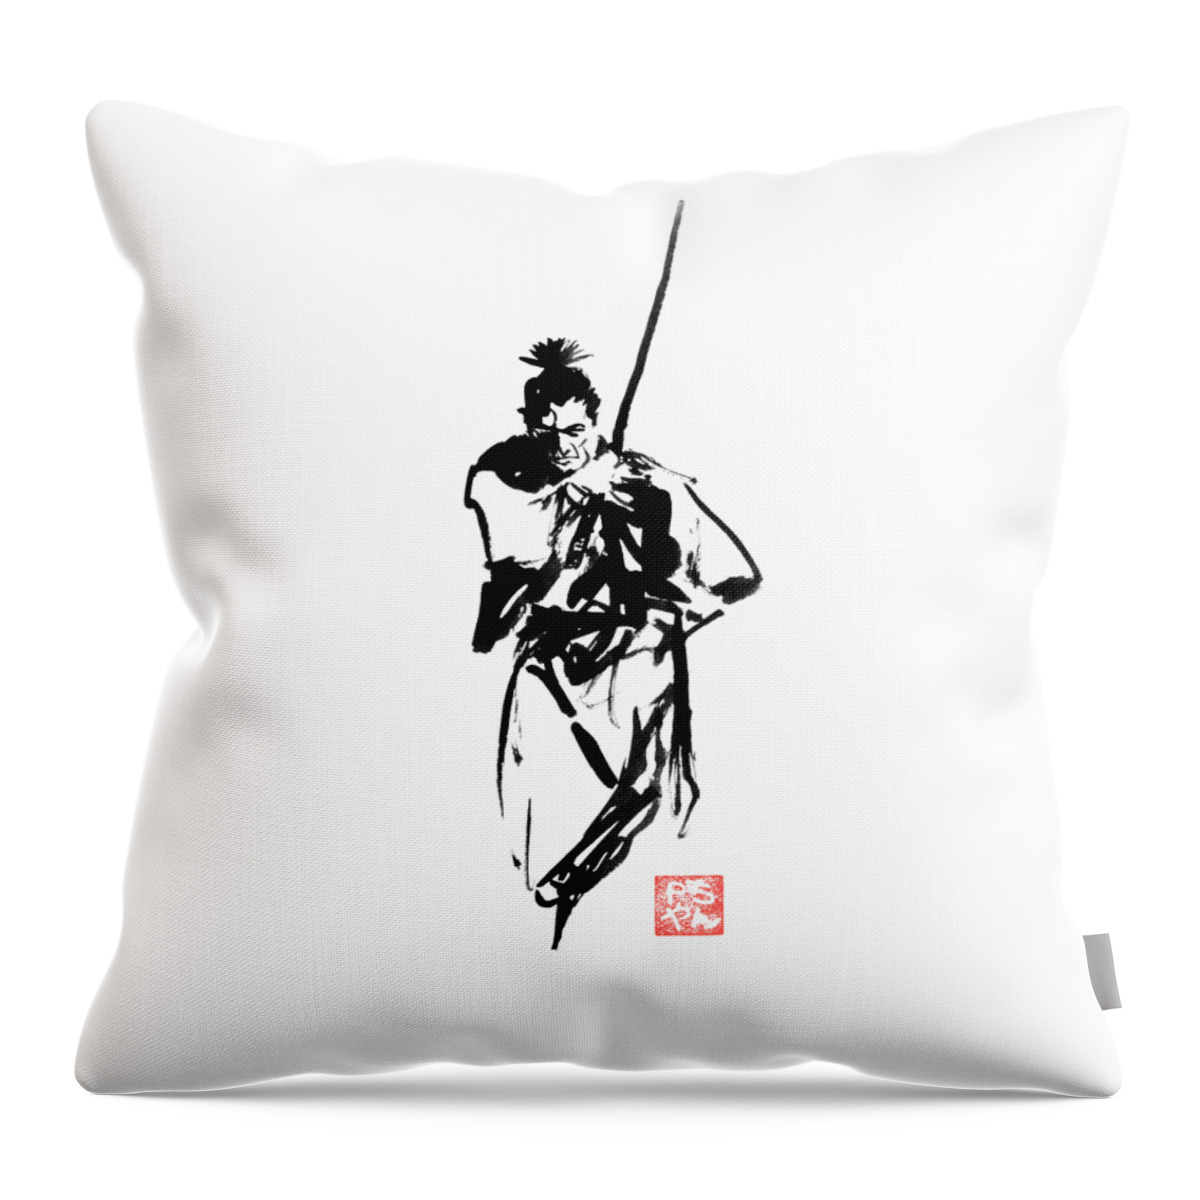 Samurai Throw Pillow featuring the painting Samurai 2 by Pechane Sumie